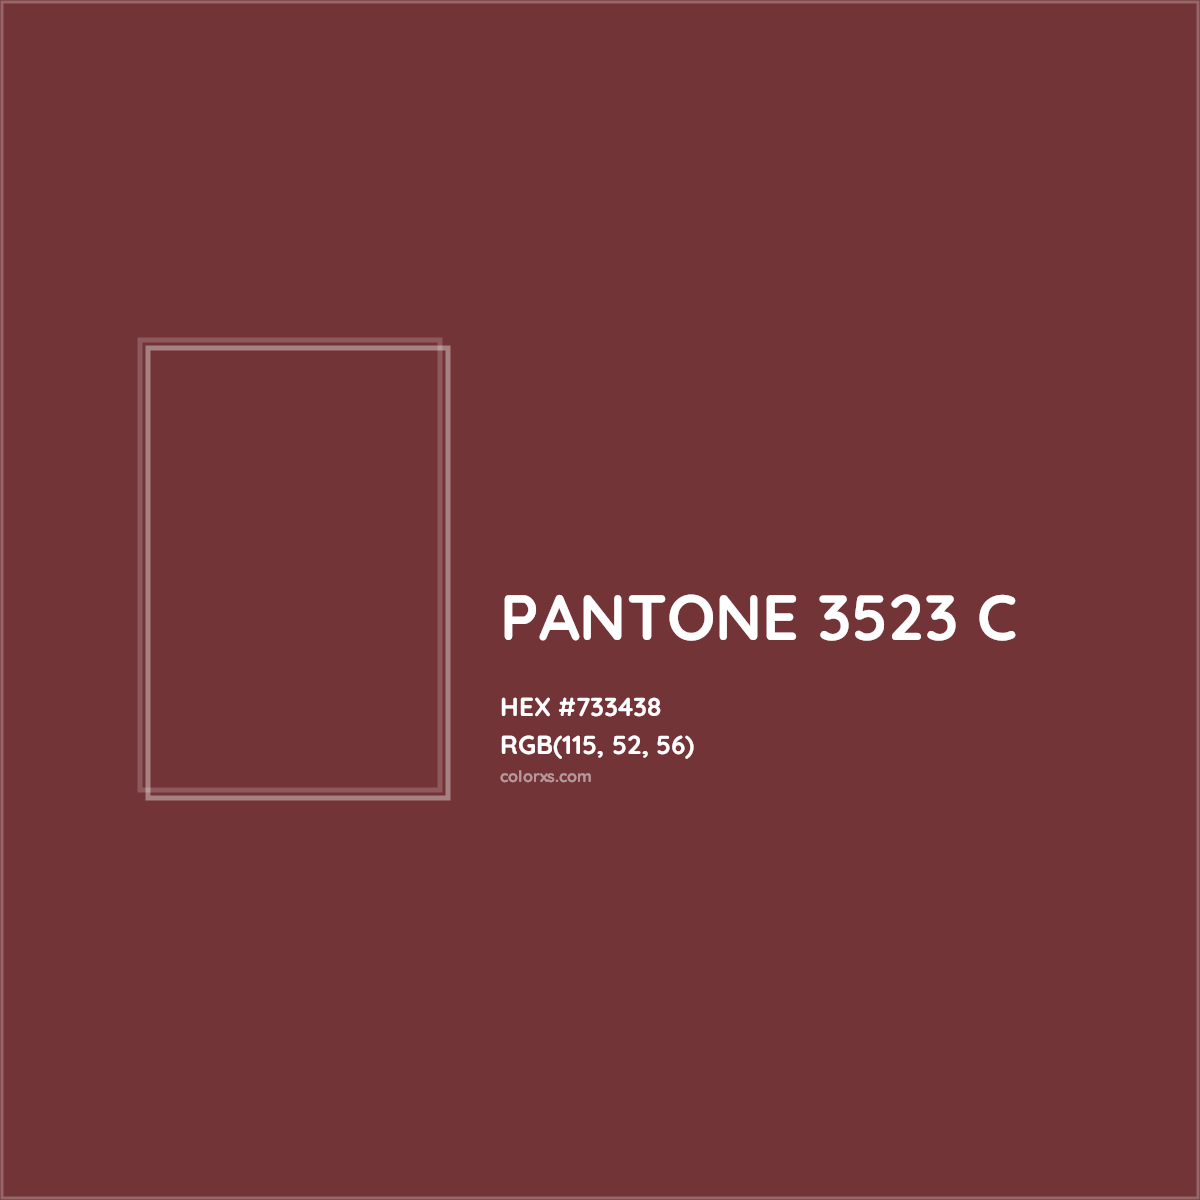 HEX #733438 PANTONE 3523 C CMS Pantone PMS - Color Code